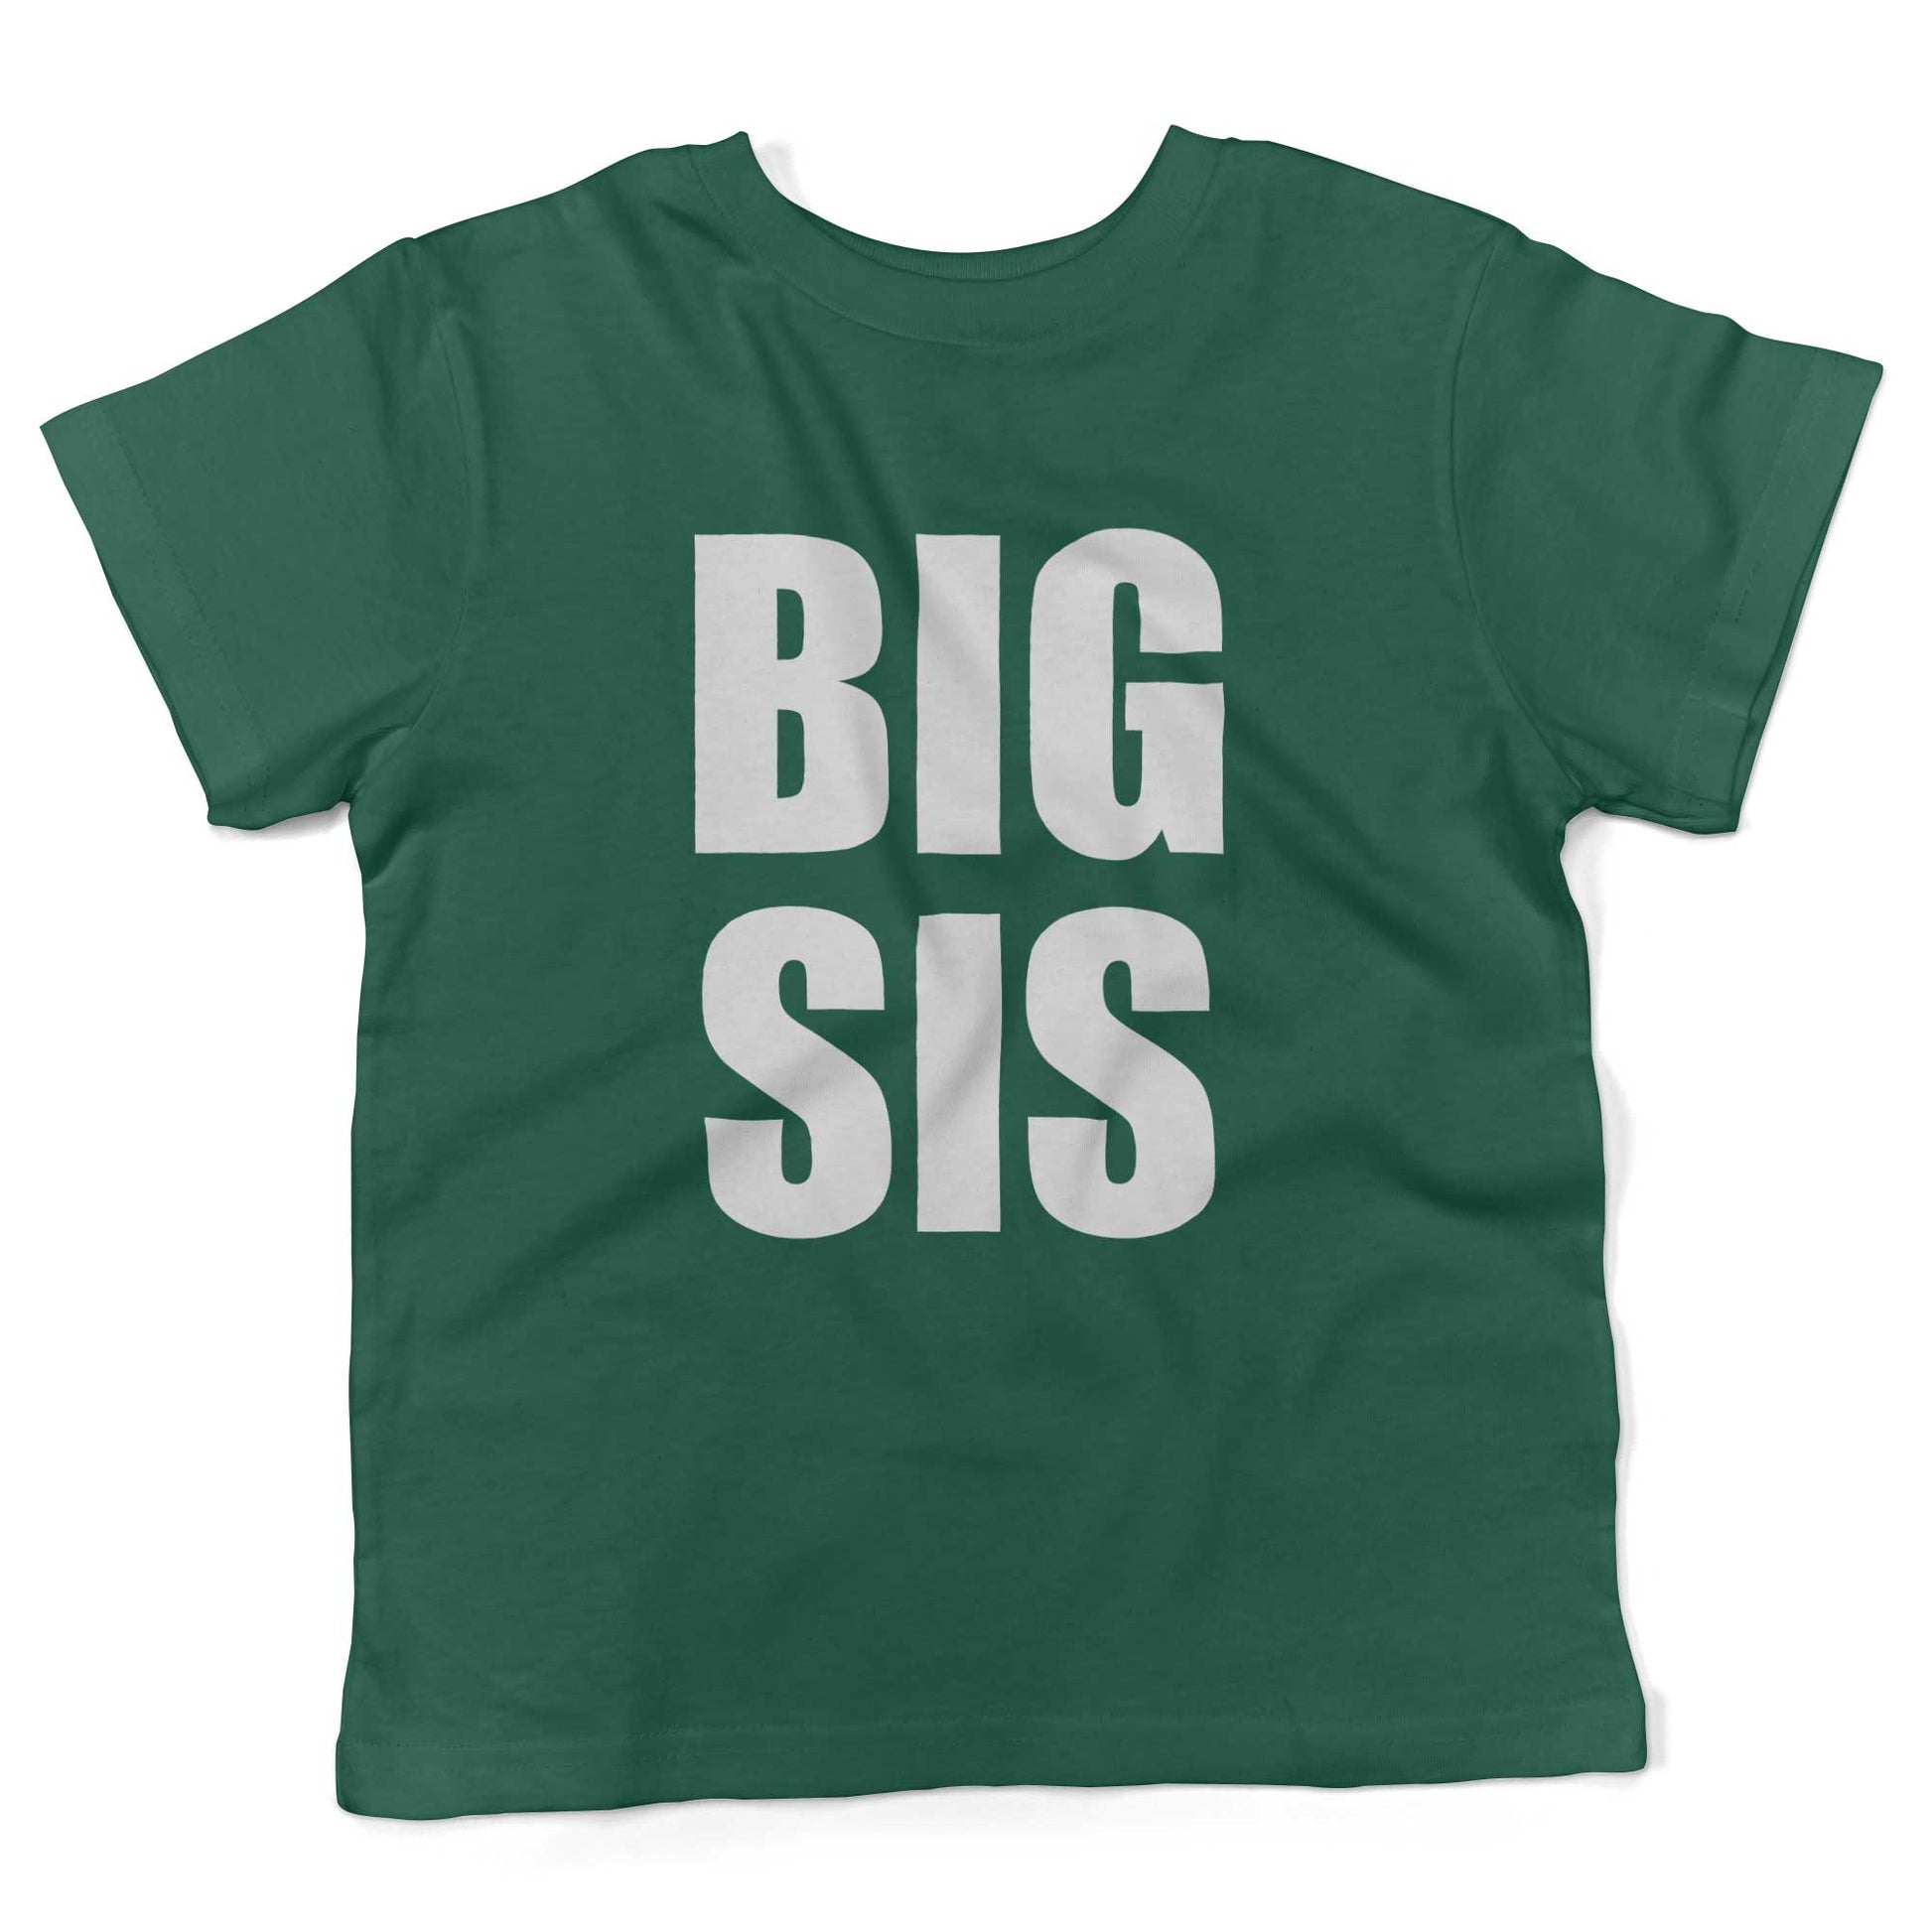 BIG SIS Toddler Shirt-Kelly Green-2T